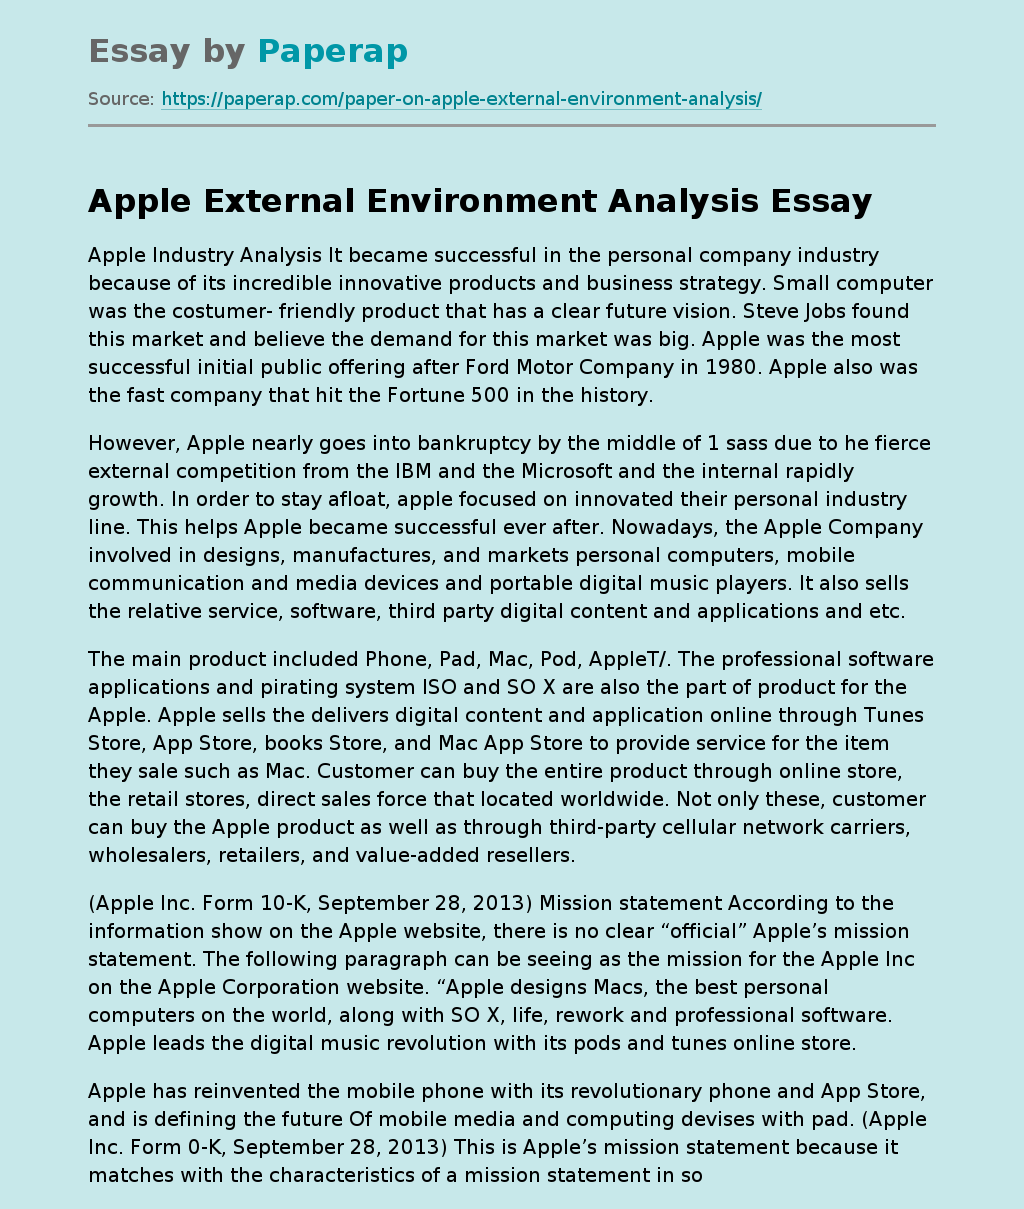 Apple External Environment Analysis